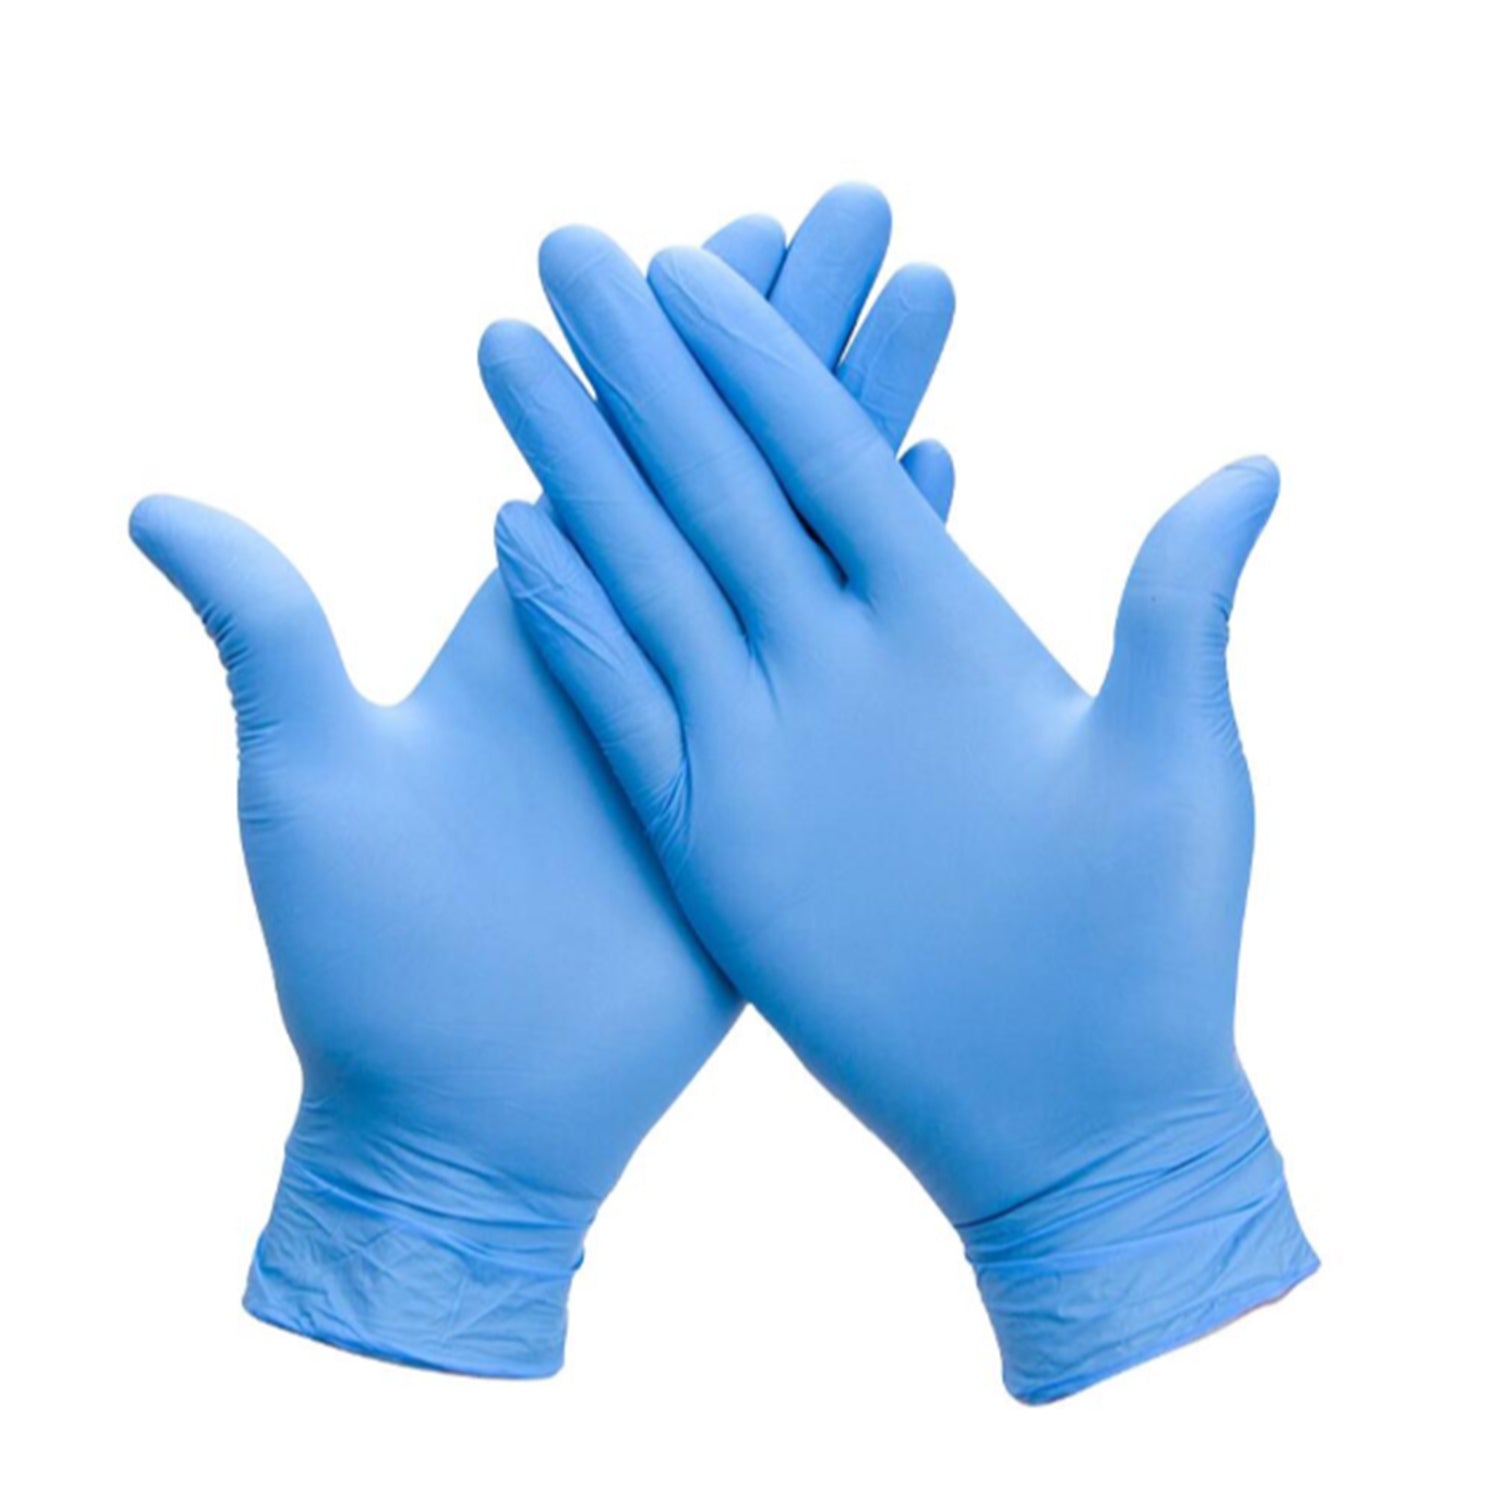 Premier AF Nitrile Examination Gloves | Sterile | Latex Free | Large | Pack of 50 Pairs (6)